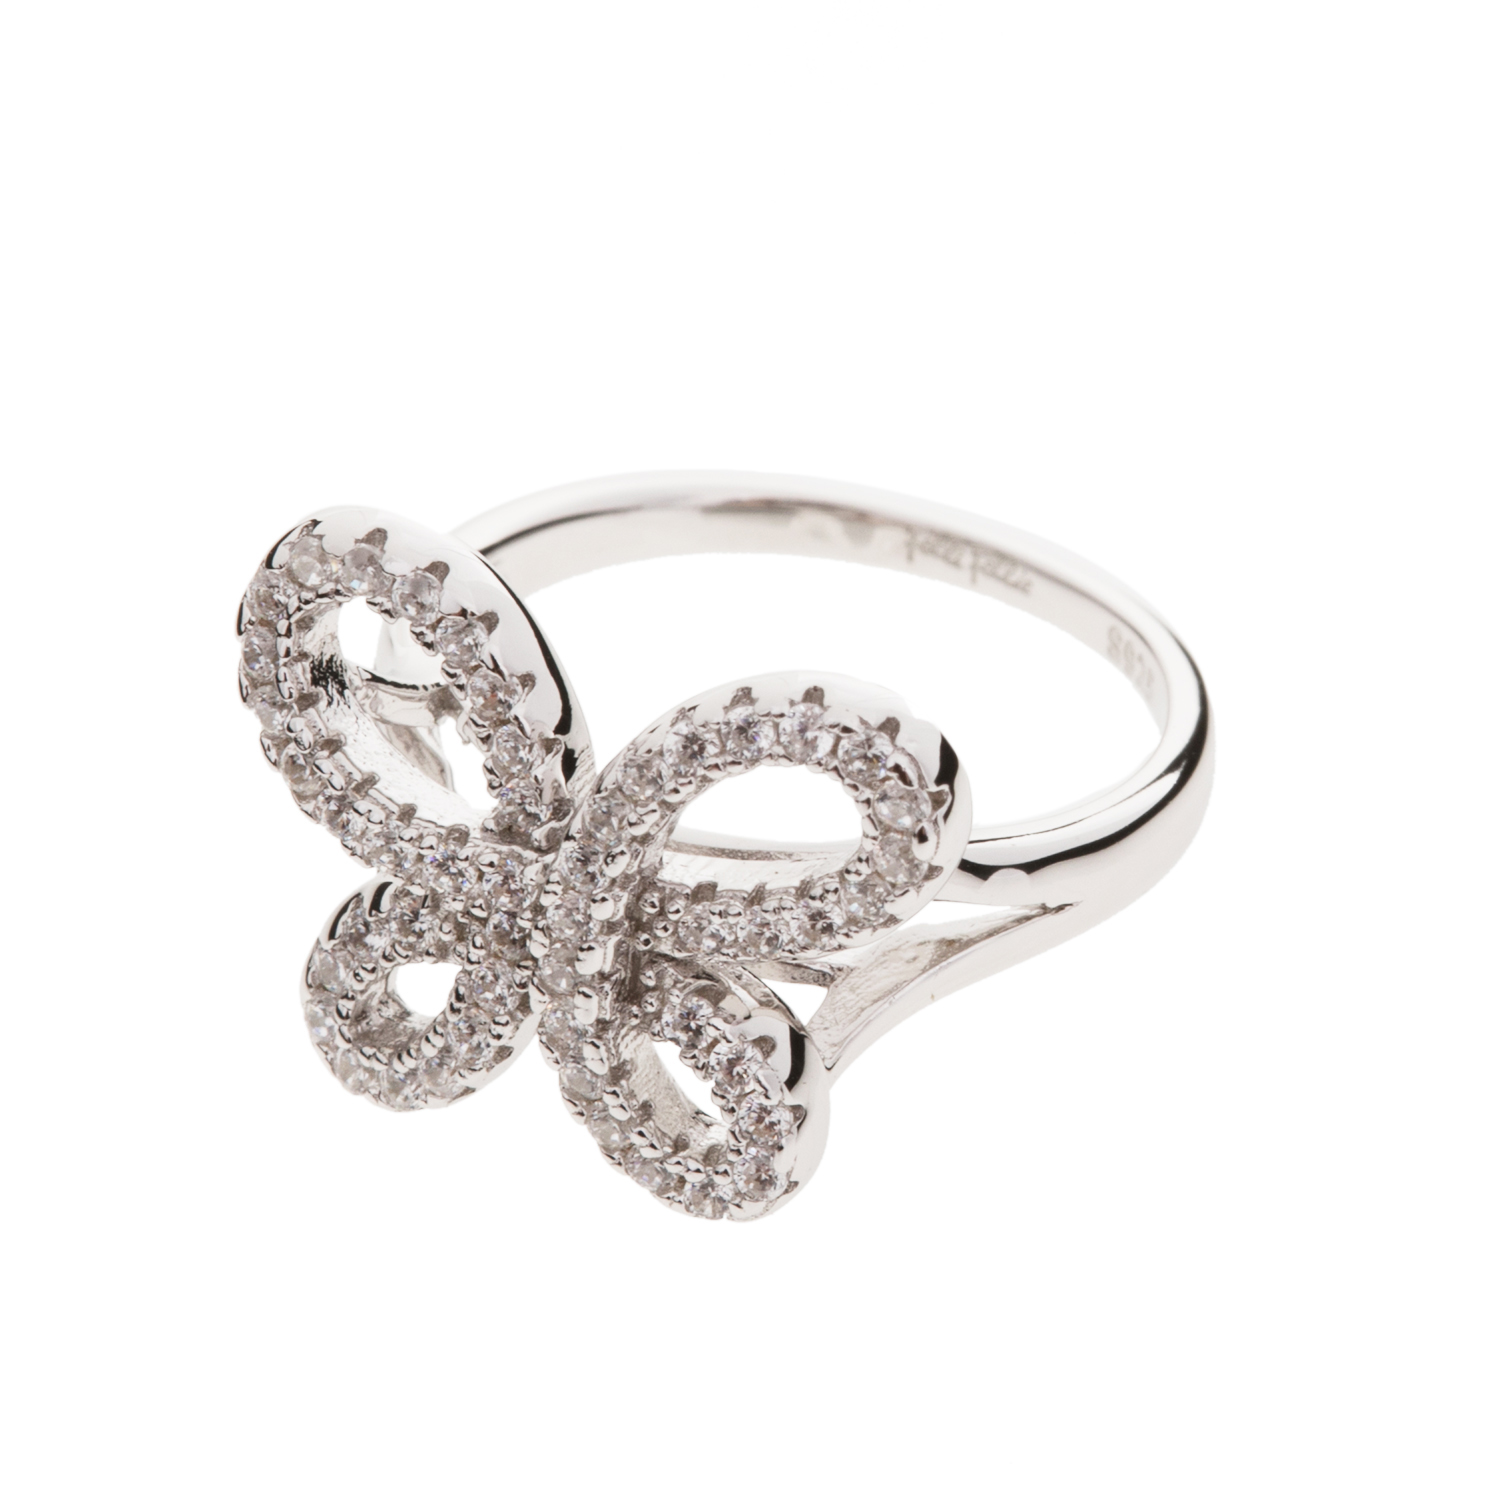 FOLLI FOLLIE - Γυναικείο ασημένιο δαχτυλίδι με πεταλούδα FOLLI FOLLIE ασημί Γυναικεία/Αξεσουάρ/Κοσμήματα/Δαχτυλίδια